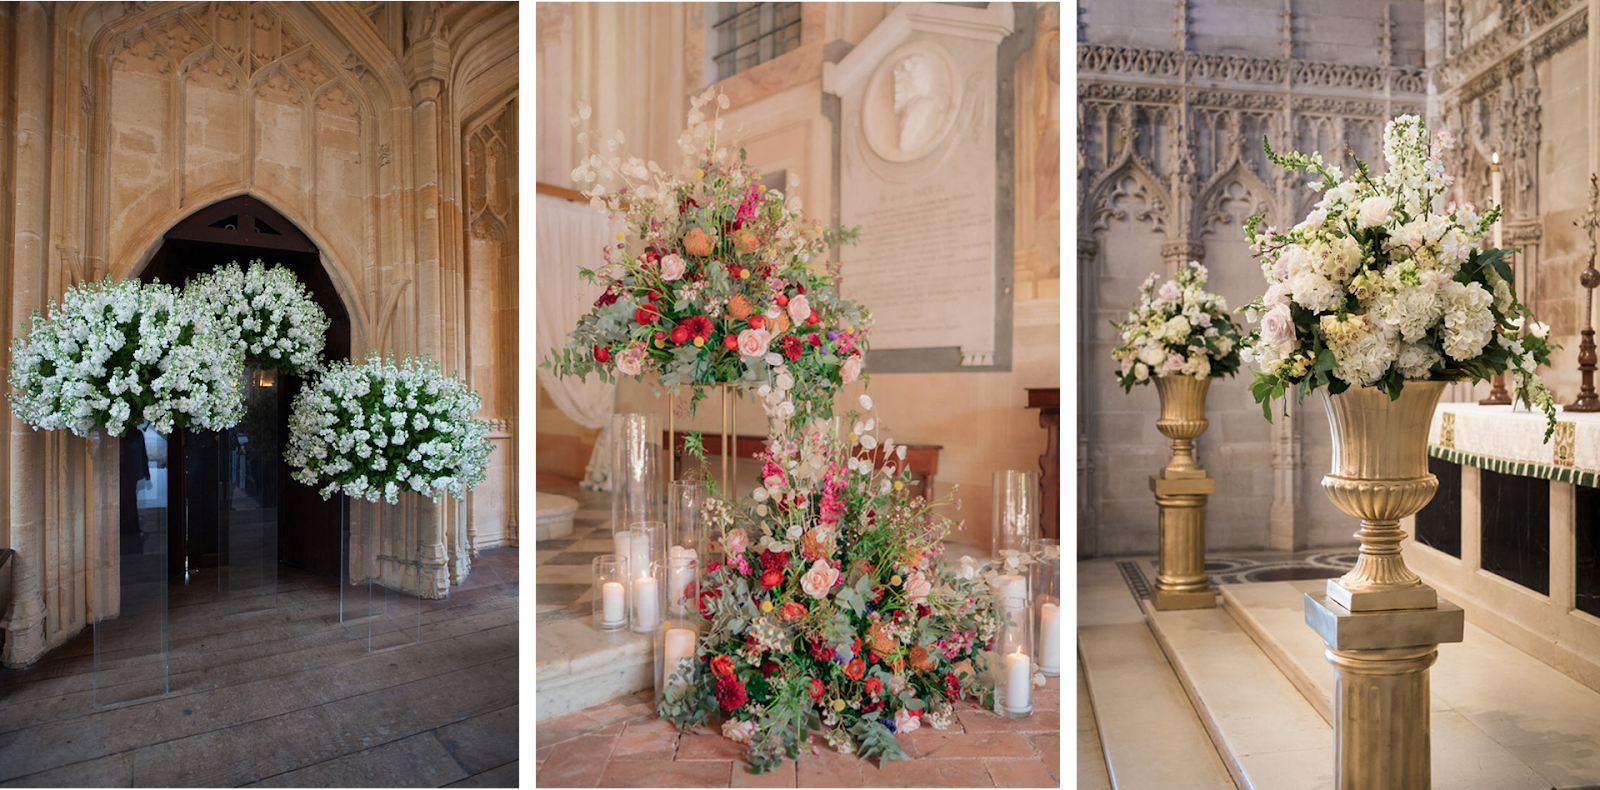 Elegant church wedding decoration ideas - Image: Pinterest